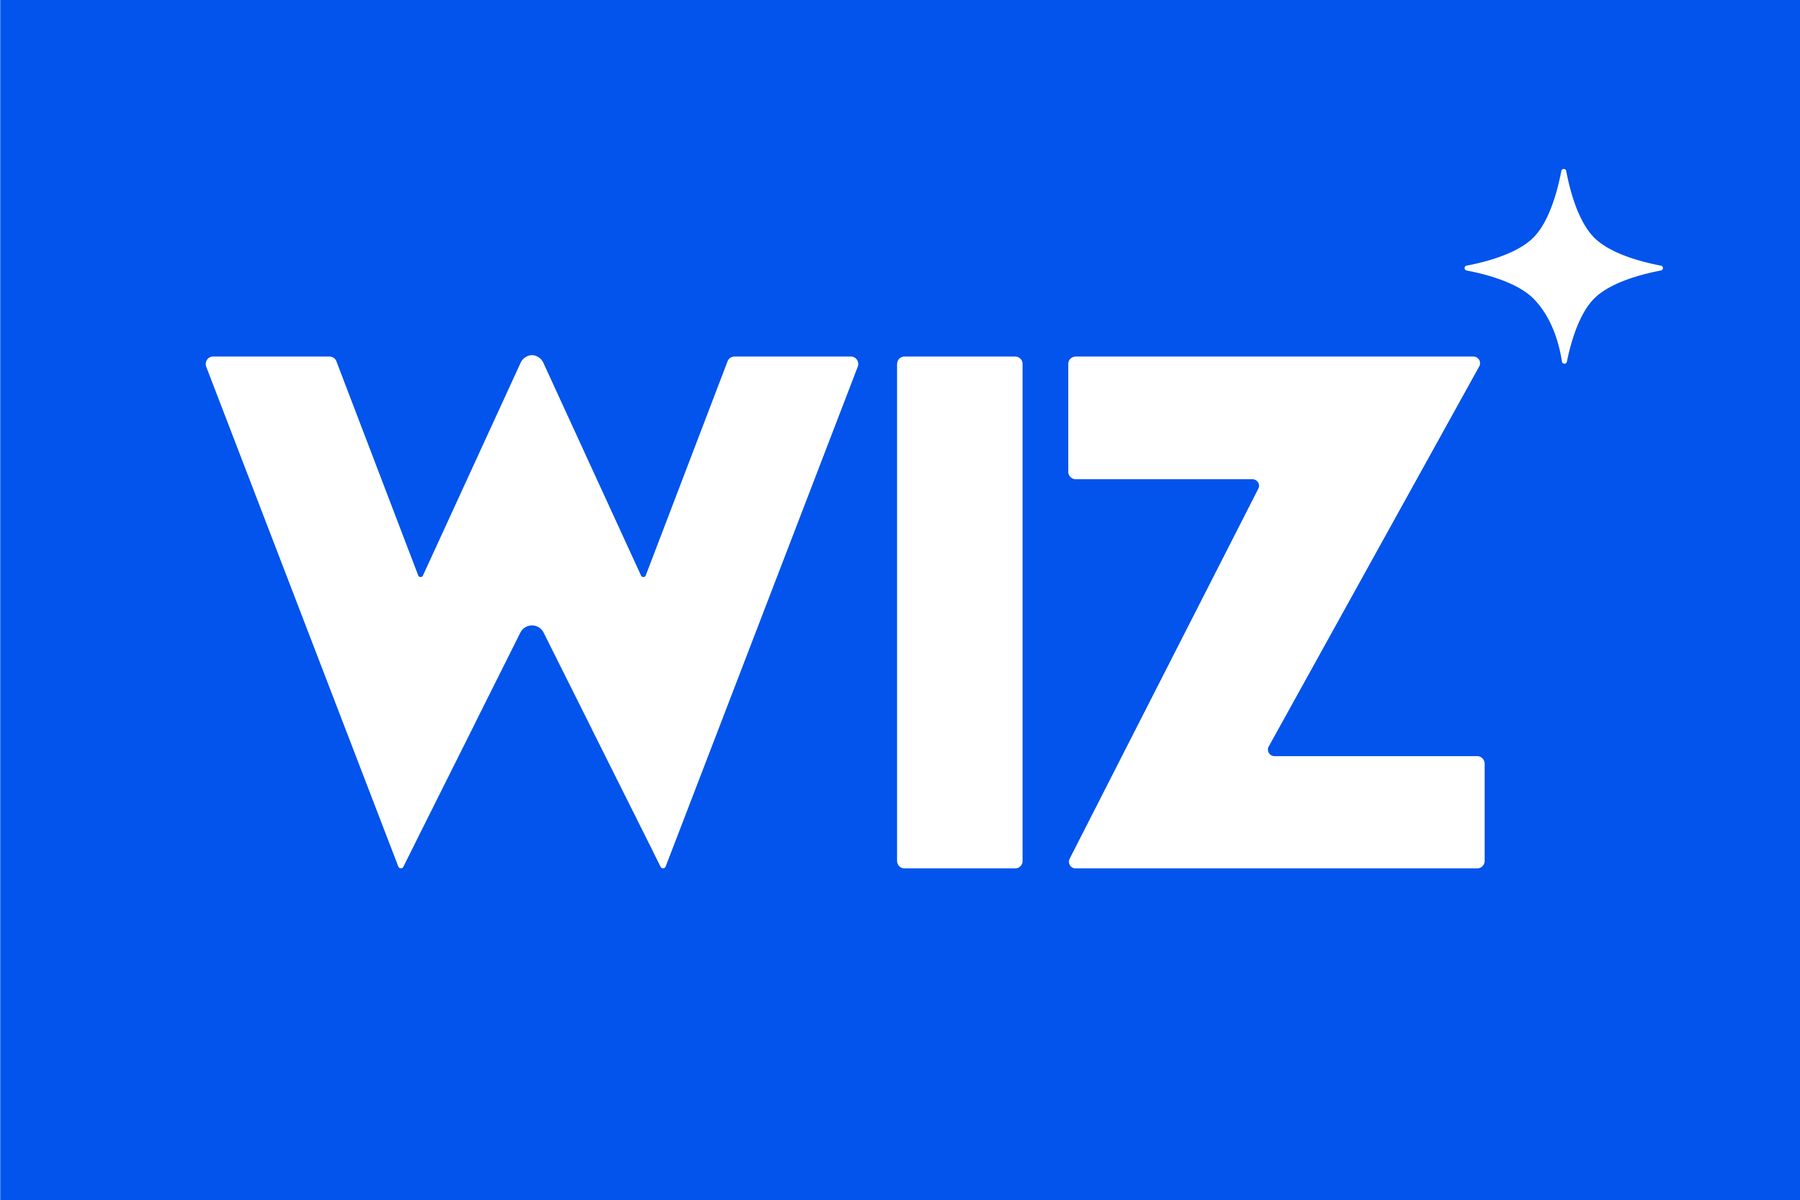 Wiz logo designed